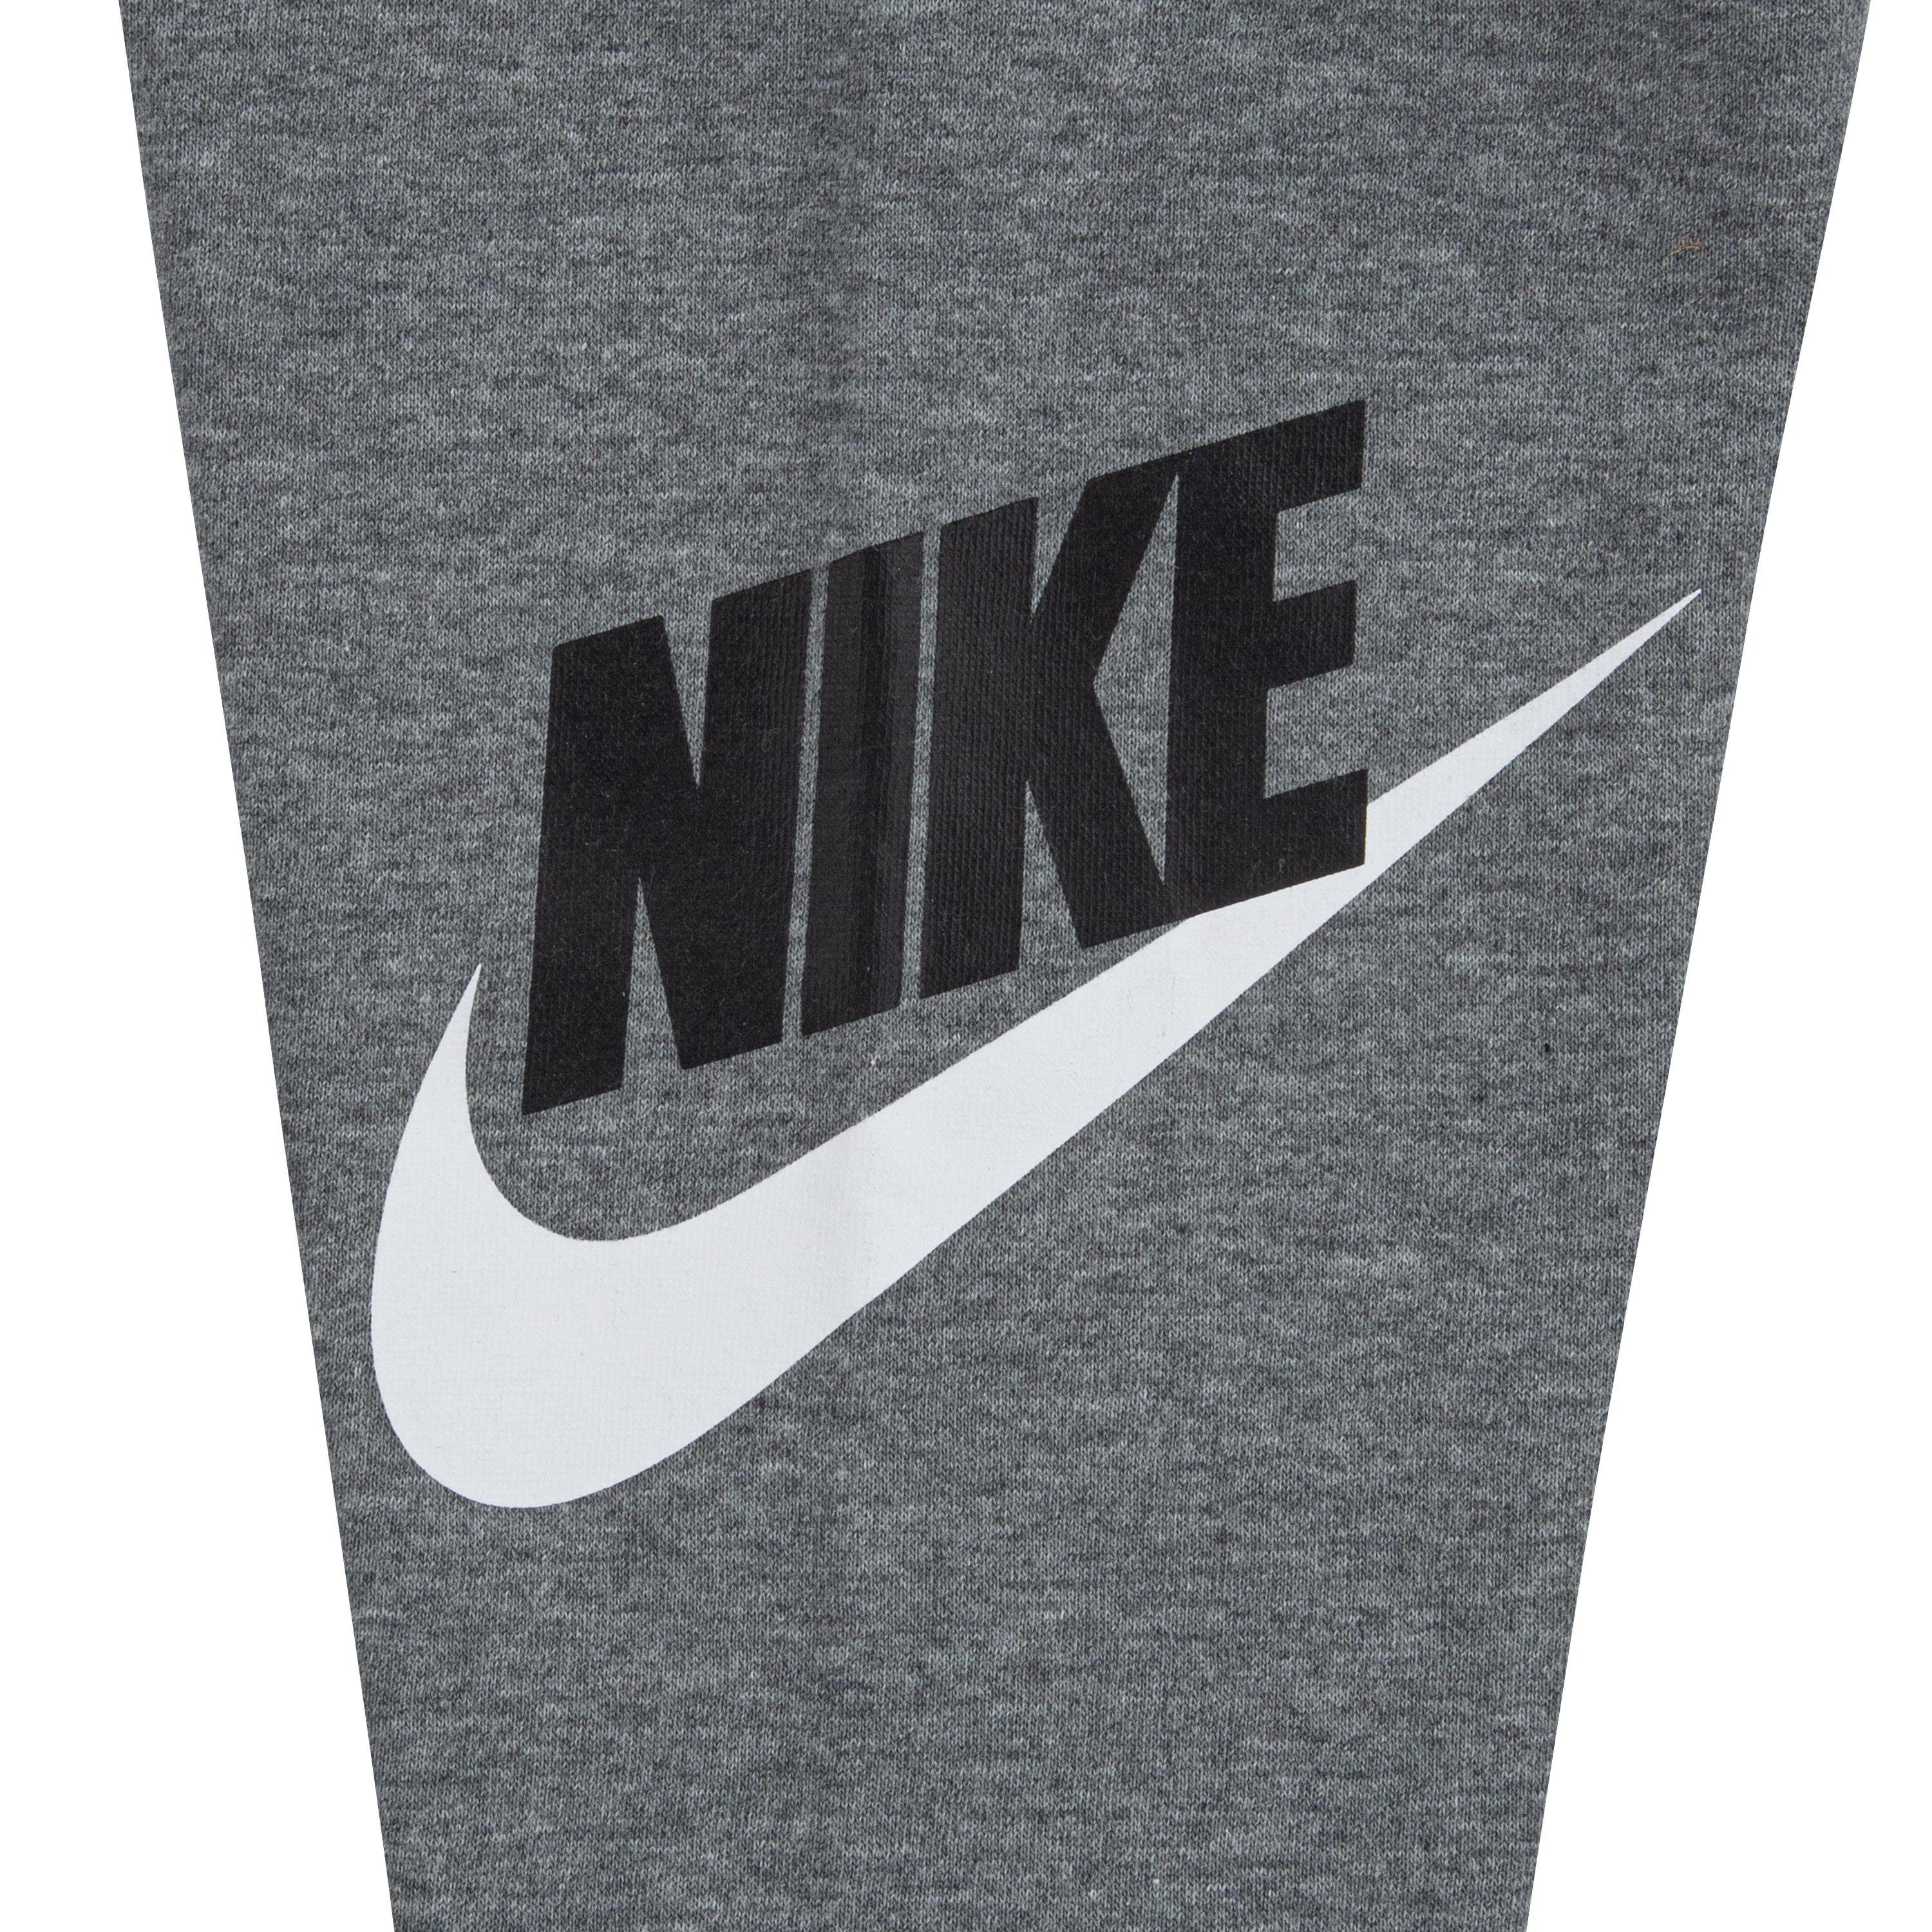 Nike grau-meliert FLEECE 2PC (Set, Jogginganzug PO JOGGER 2-tlg) Sportswear SET & HOODIE